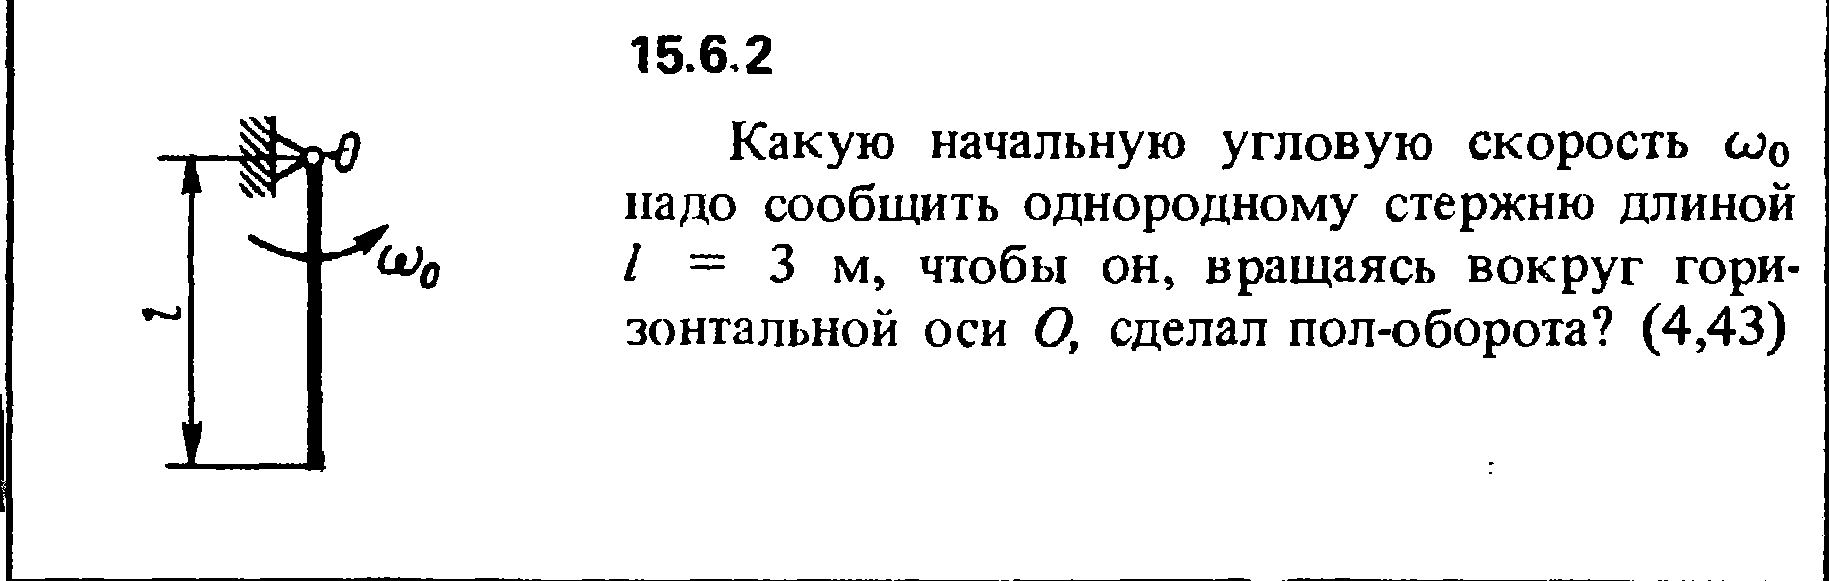 Решение задачи 15.6.2 из сборника Кепе О.Е. 1989 года